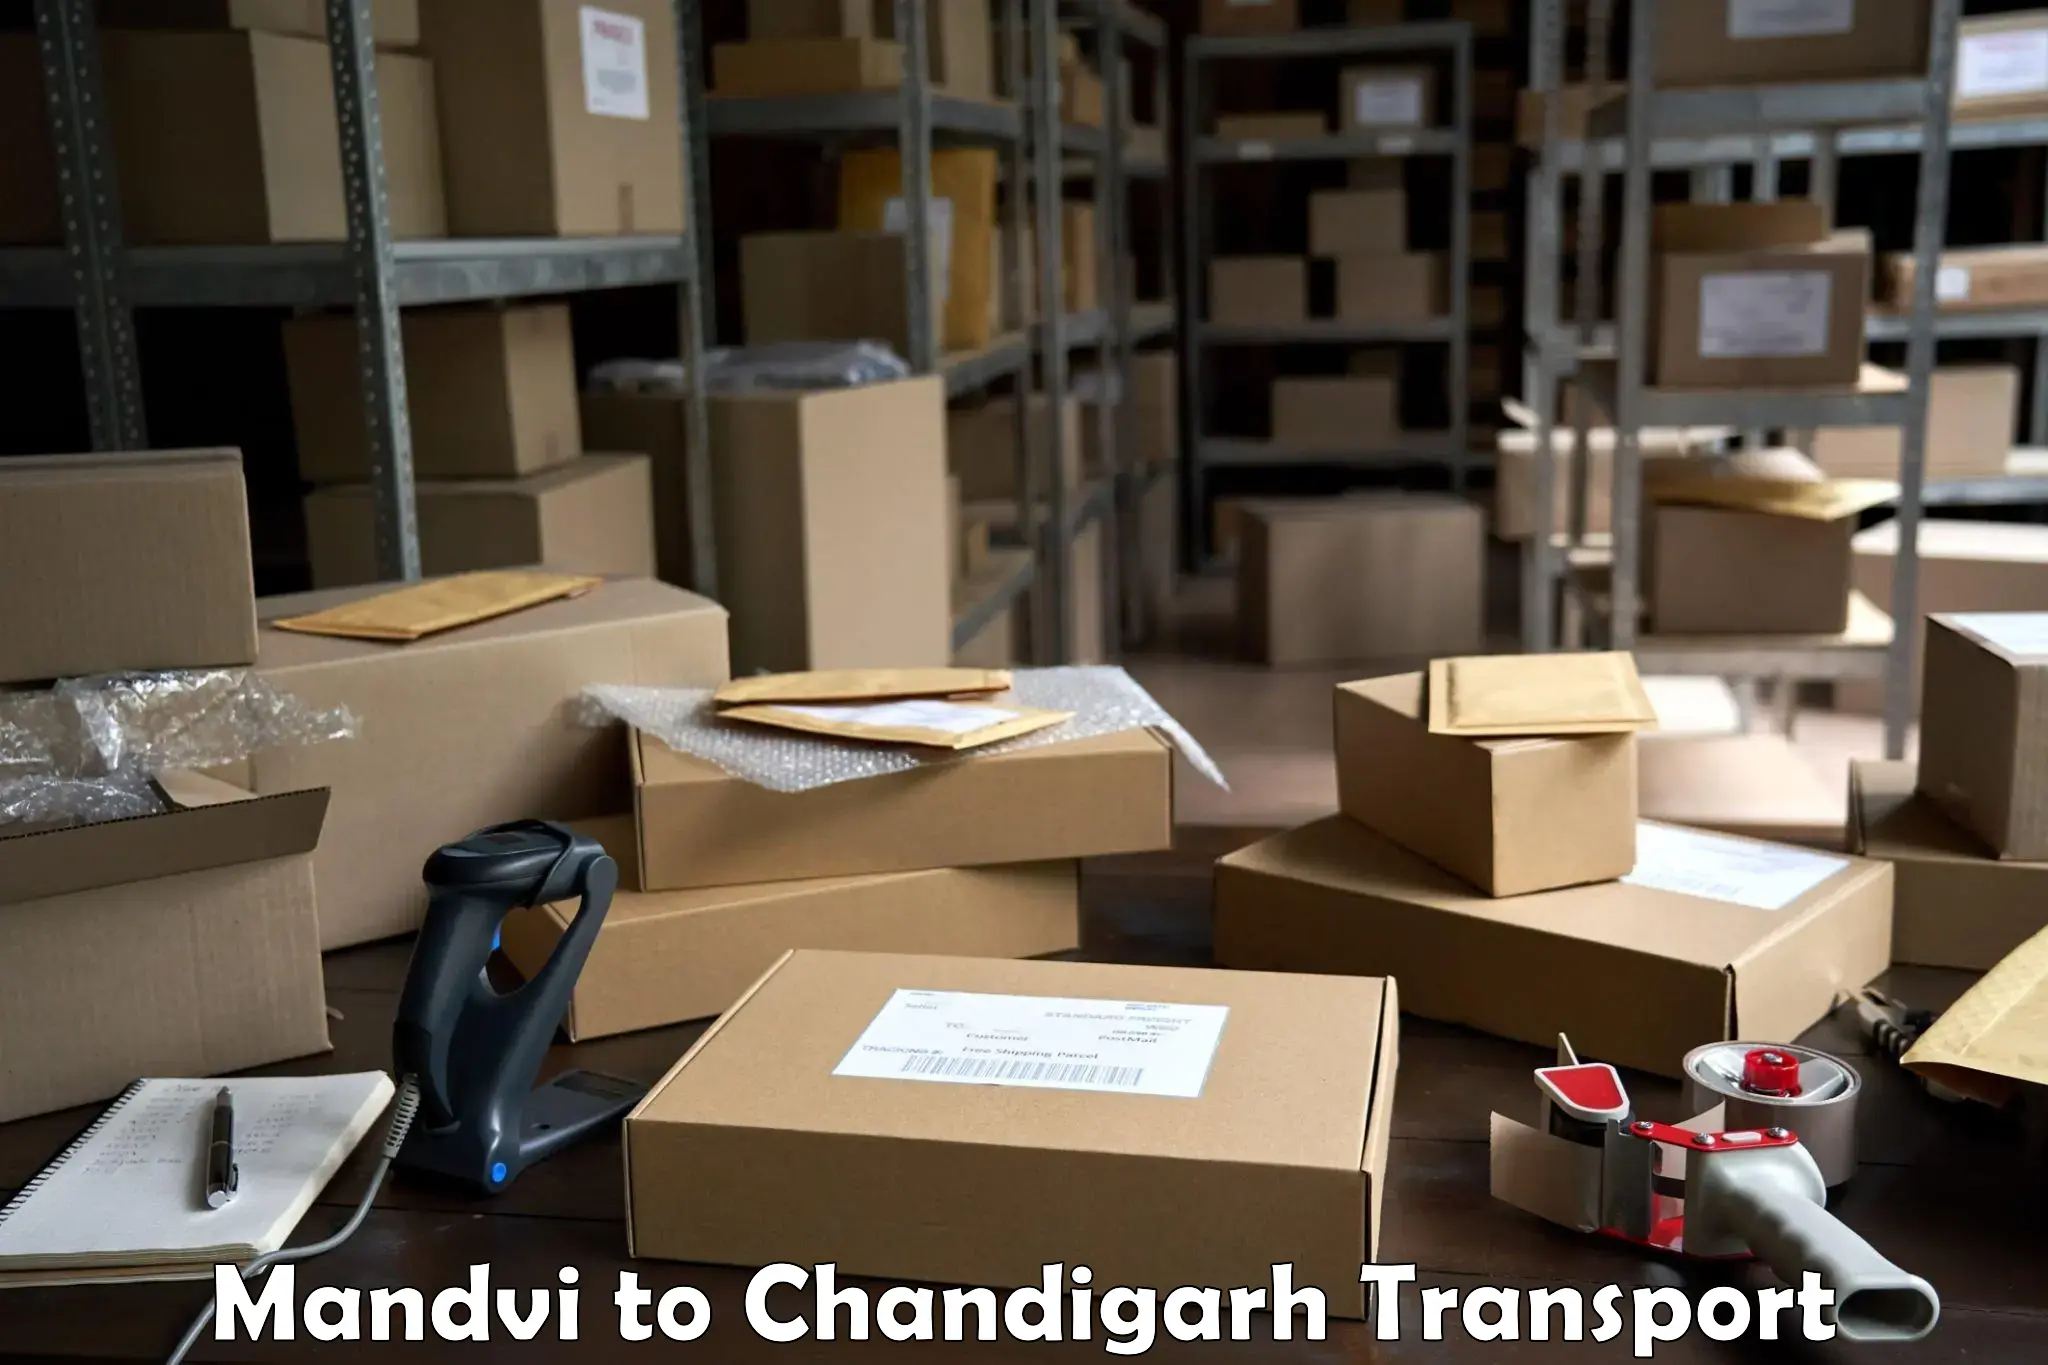 Truck transport companies in India Mandvi to Chandigarh